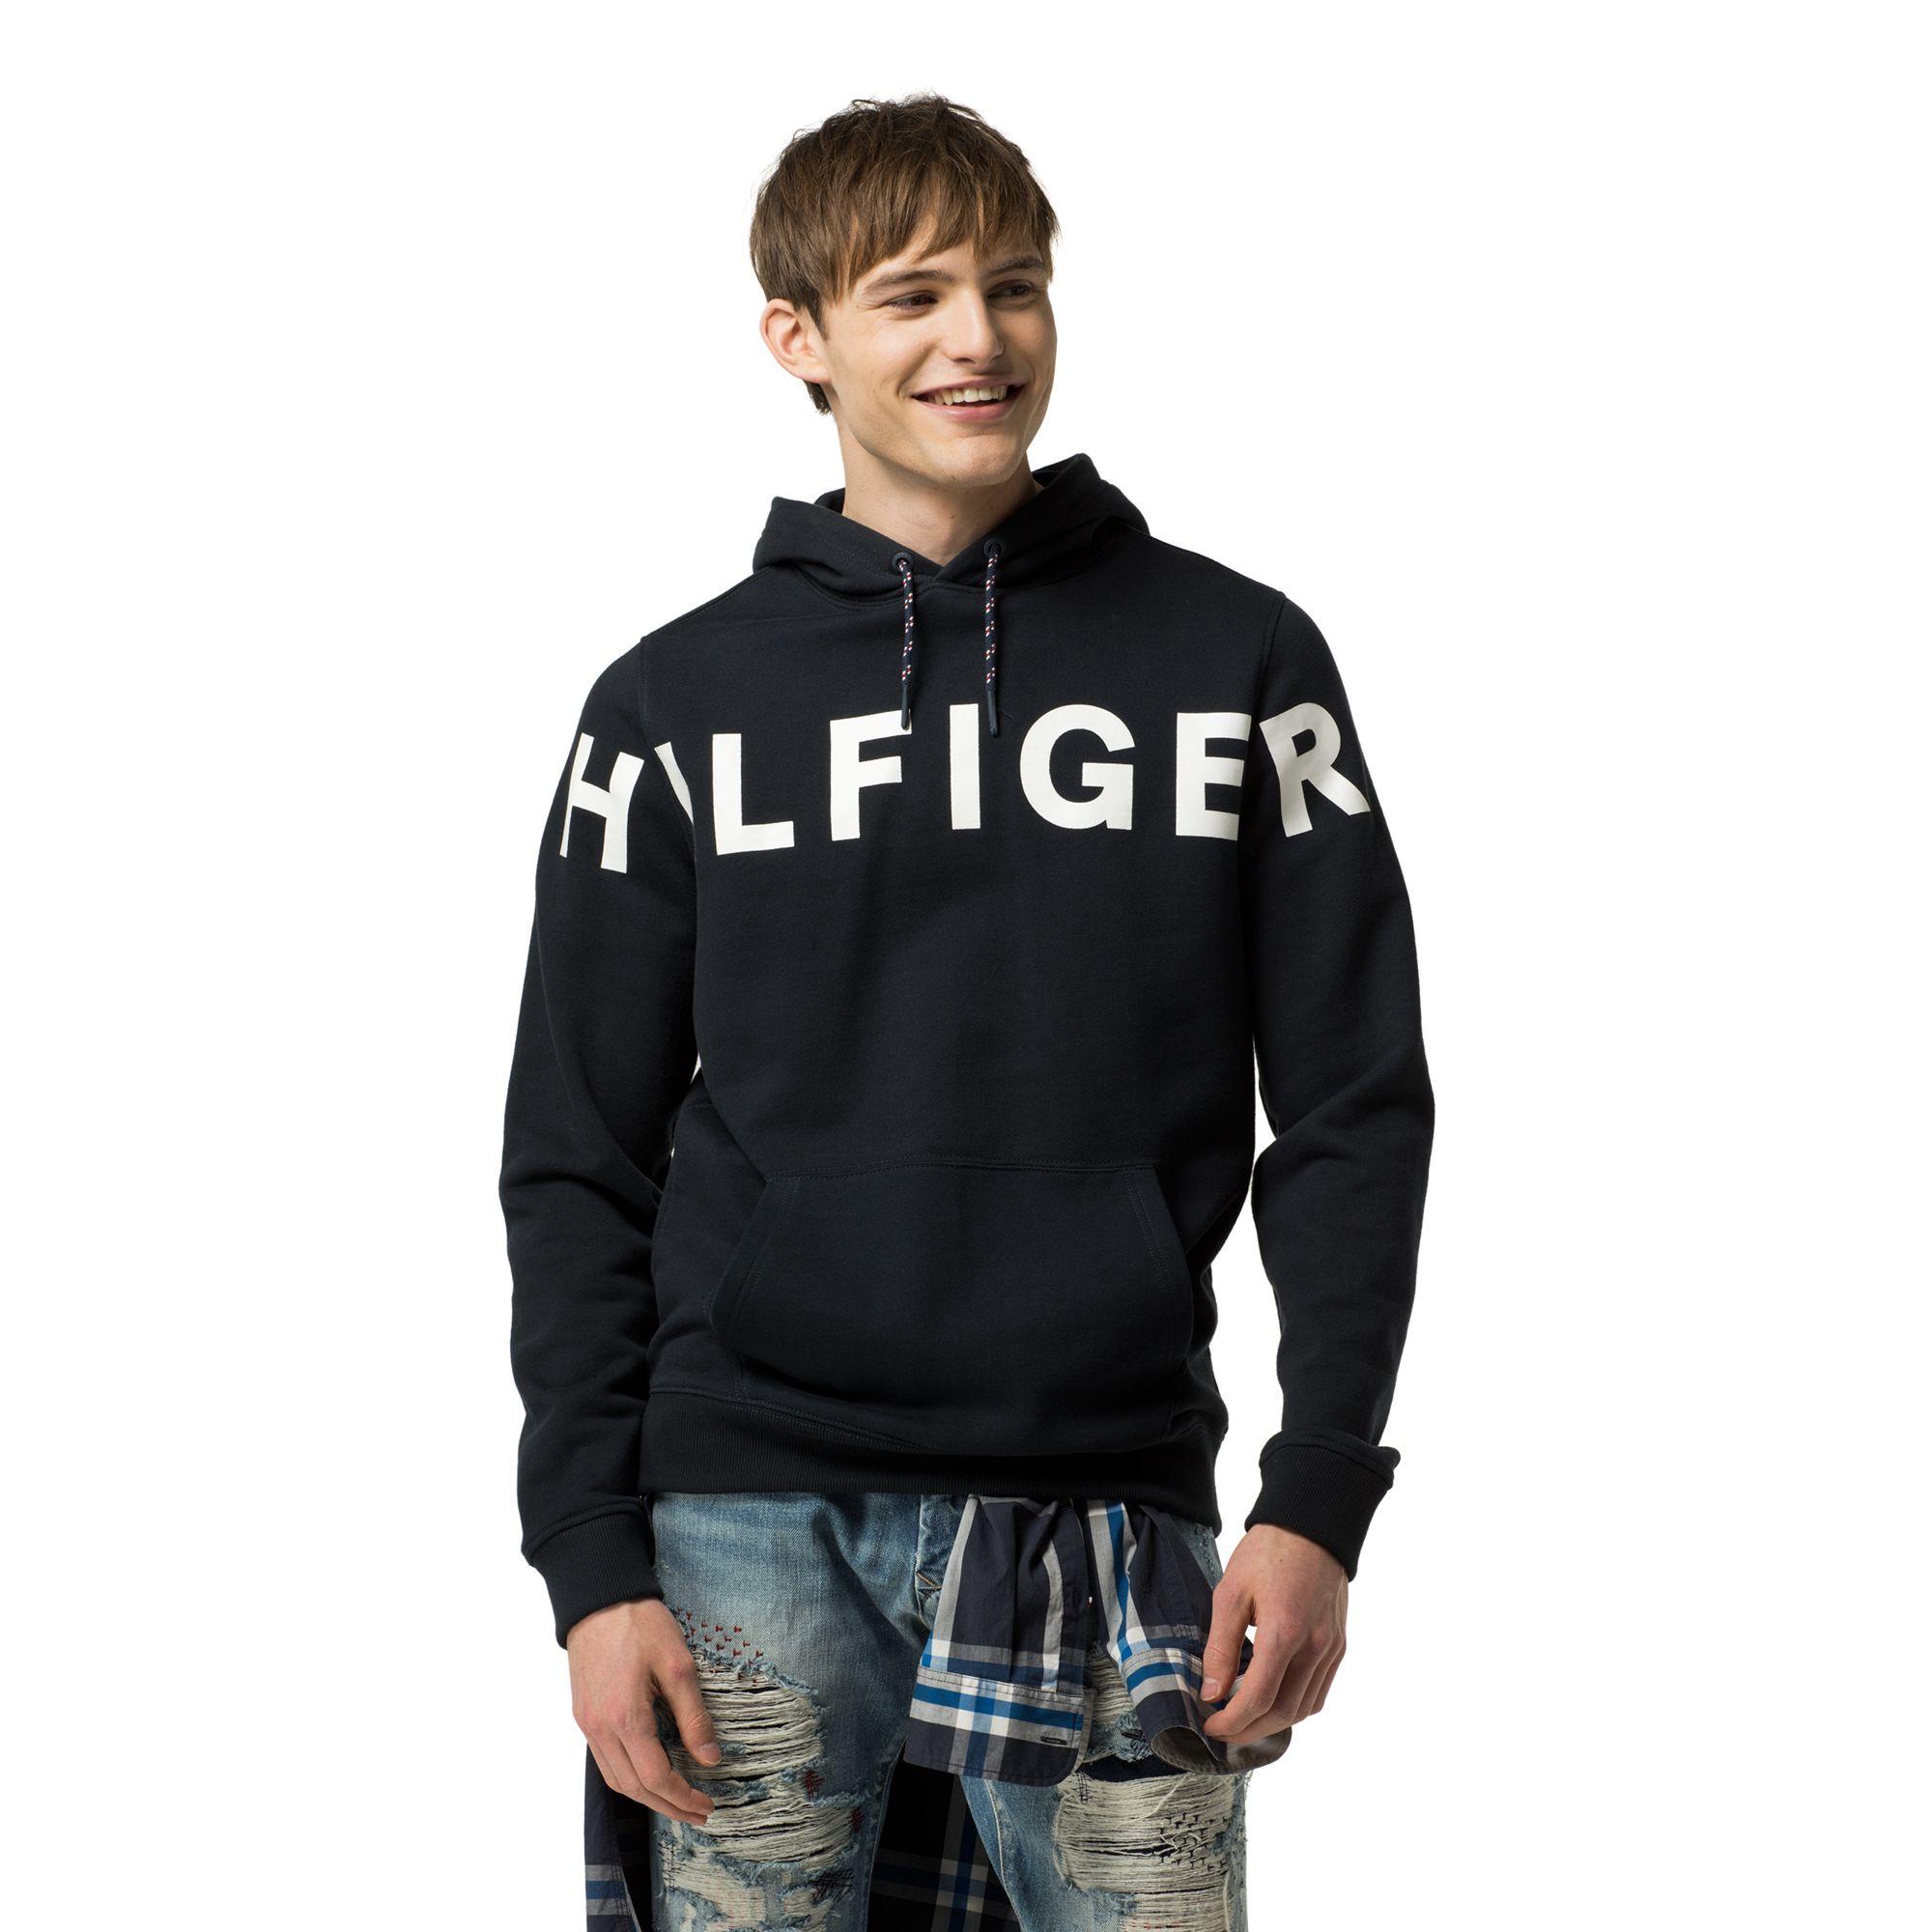 hilfiger logo hoodie